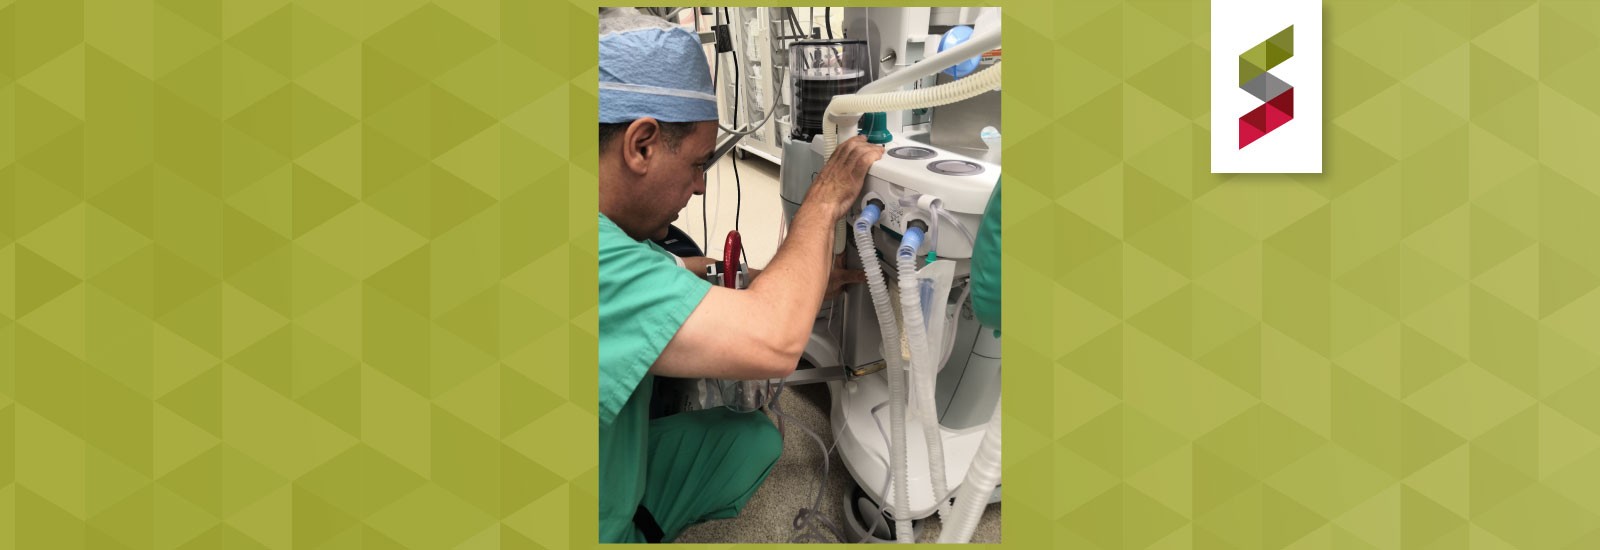 doctor checking anesthesia machine